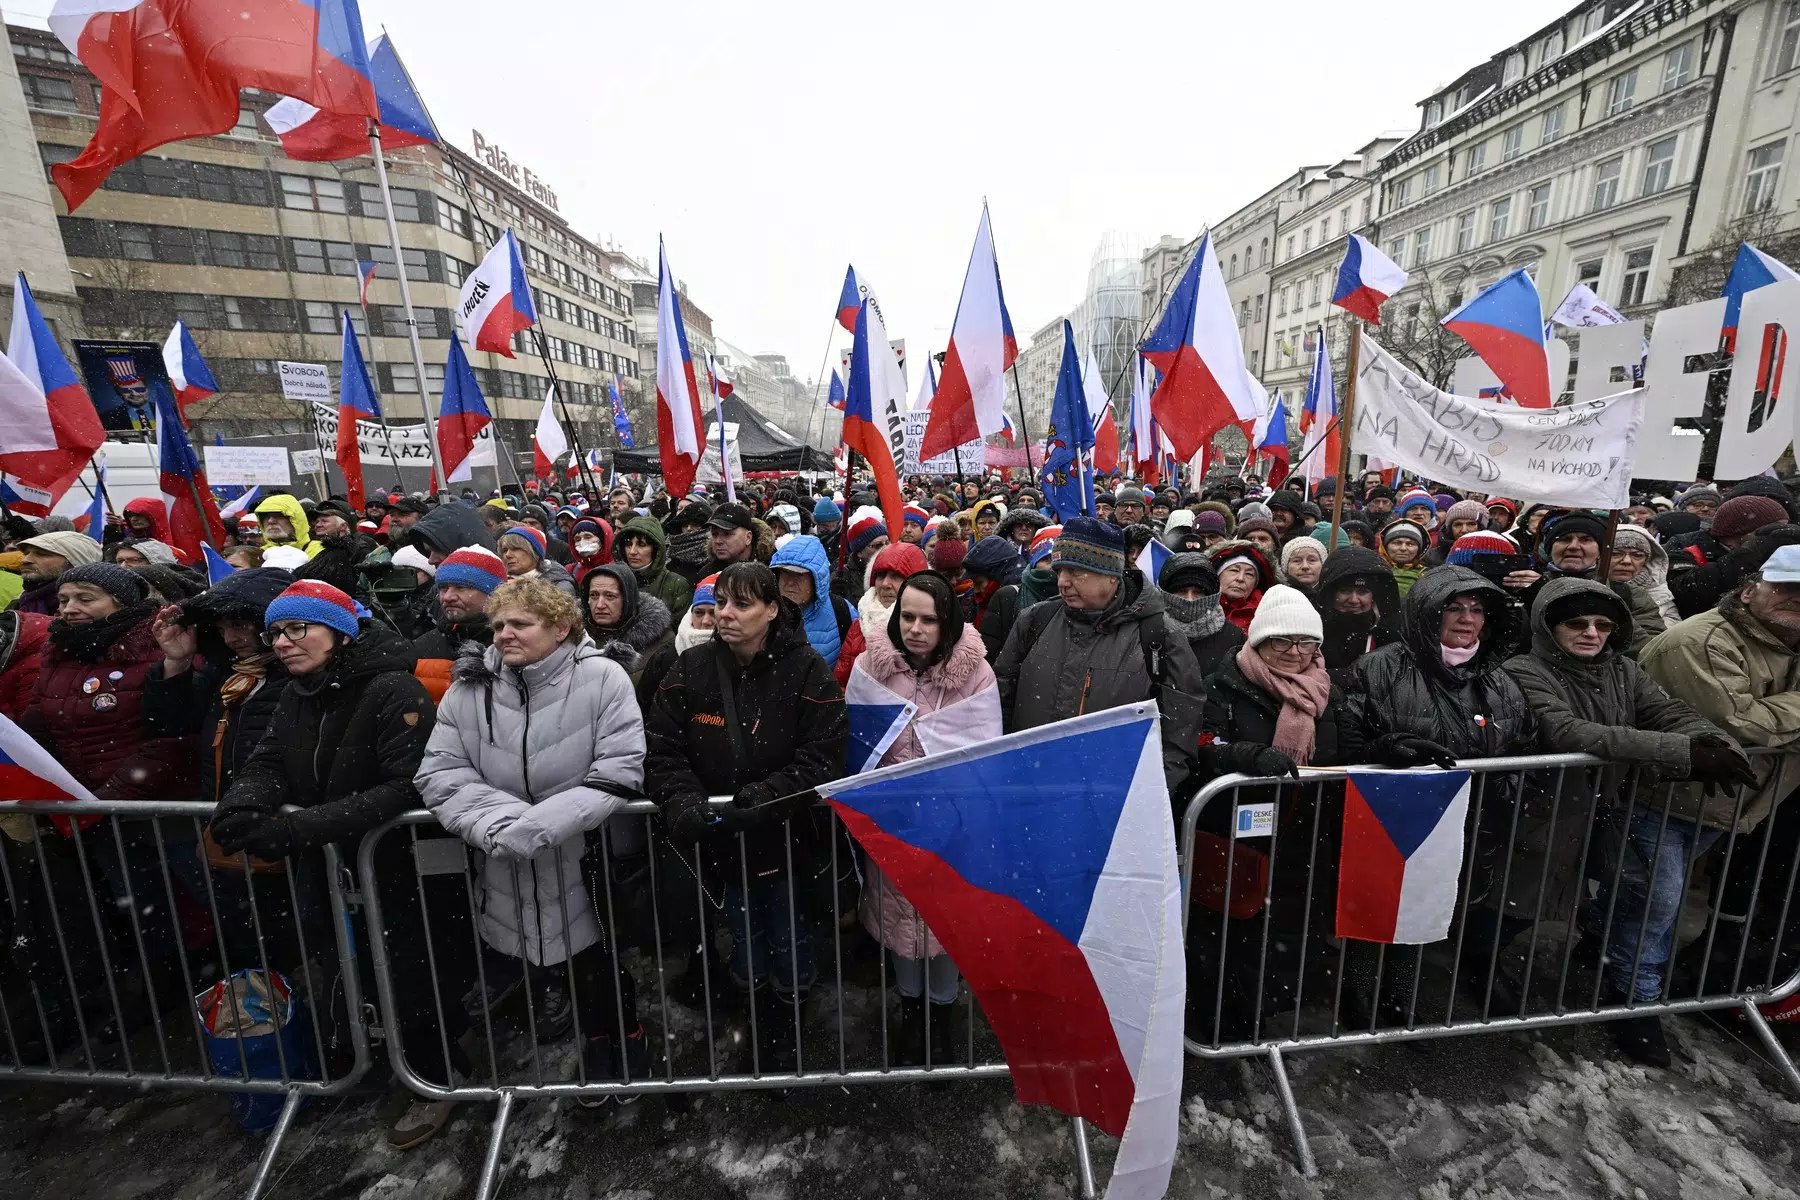 Правительство против народа. Митинг на улице. Народ против власти Украина. Митинг против своего. Народ против правительства